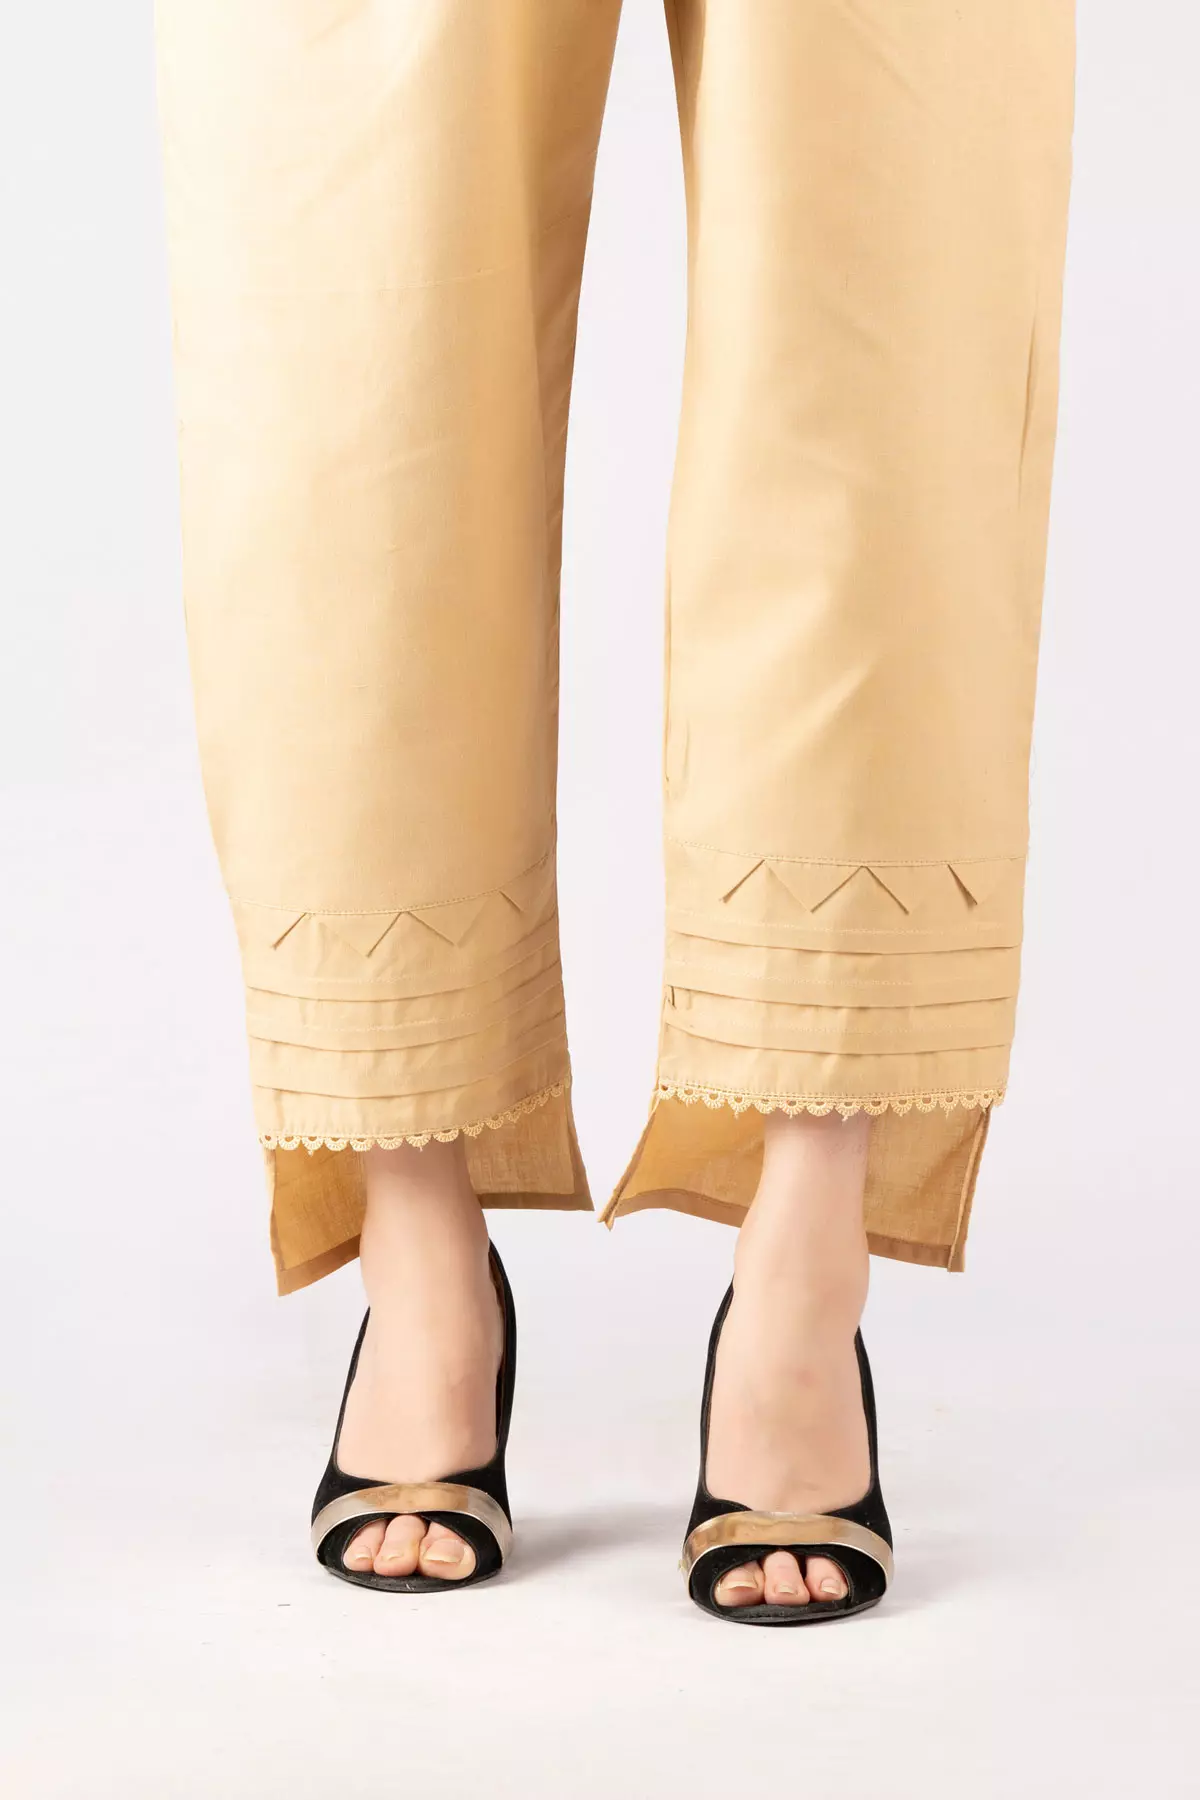 Trouser Designs 2021  Latest trouser design 2021  Palazzo Designs  Collection 2020  TrouserDesigns2021 Latesttrouserdesign2021  PalazzoDesignsCollection2020  By Shabeena Fashion  Facebook